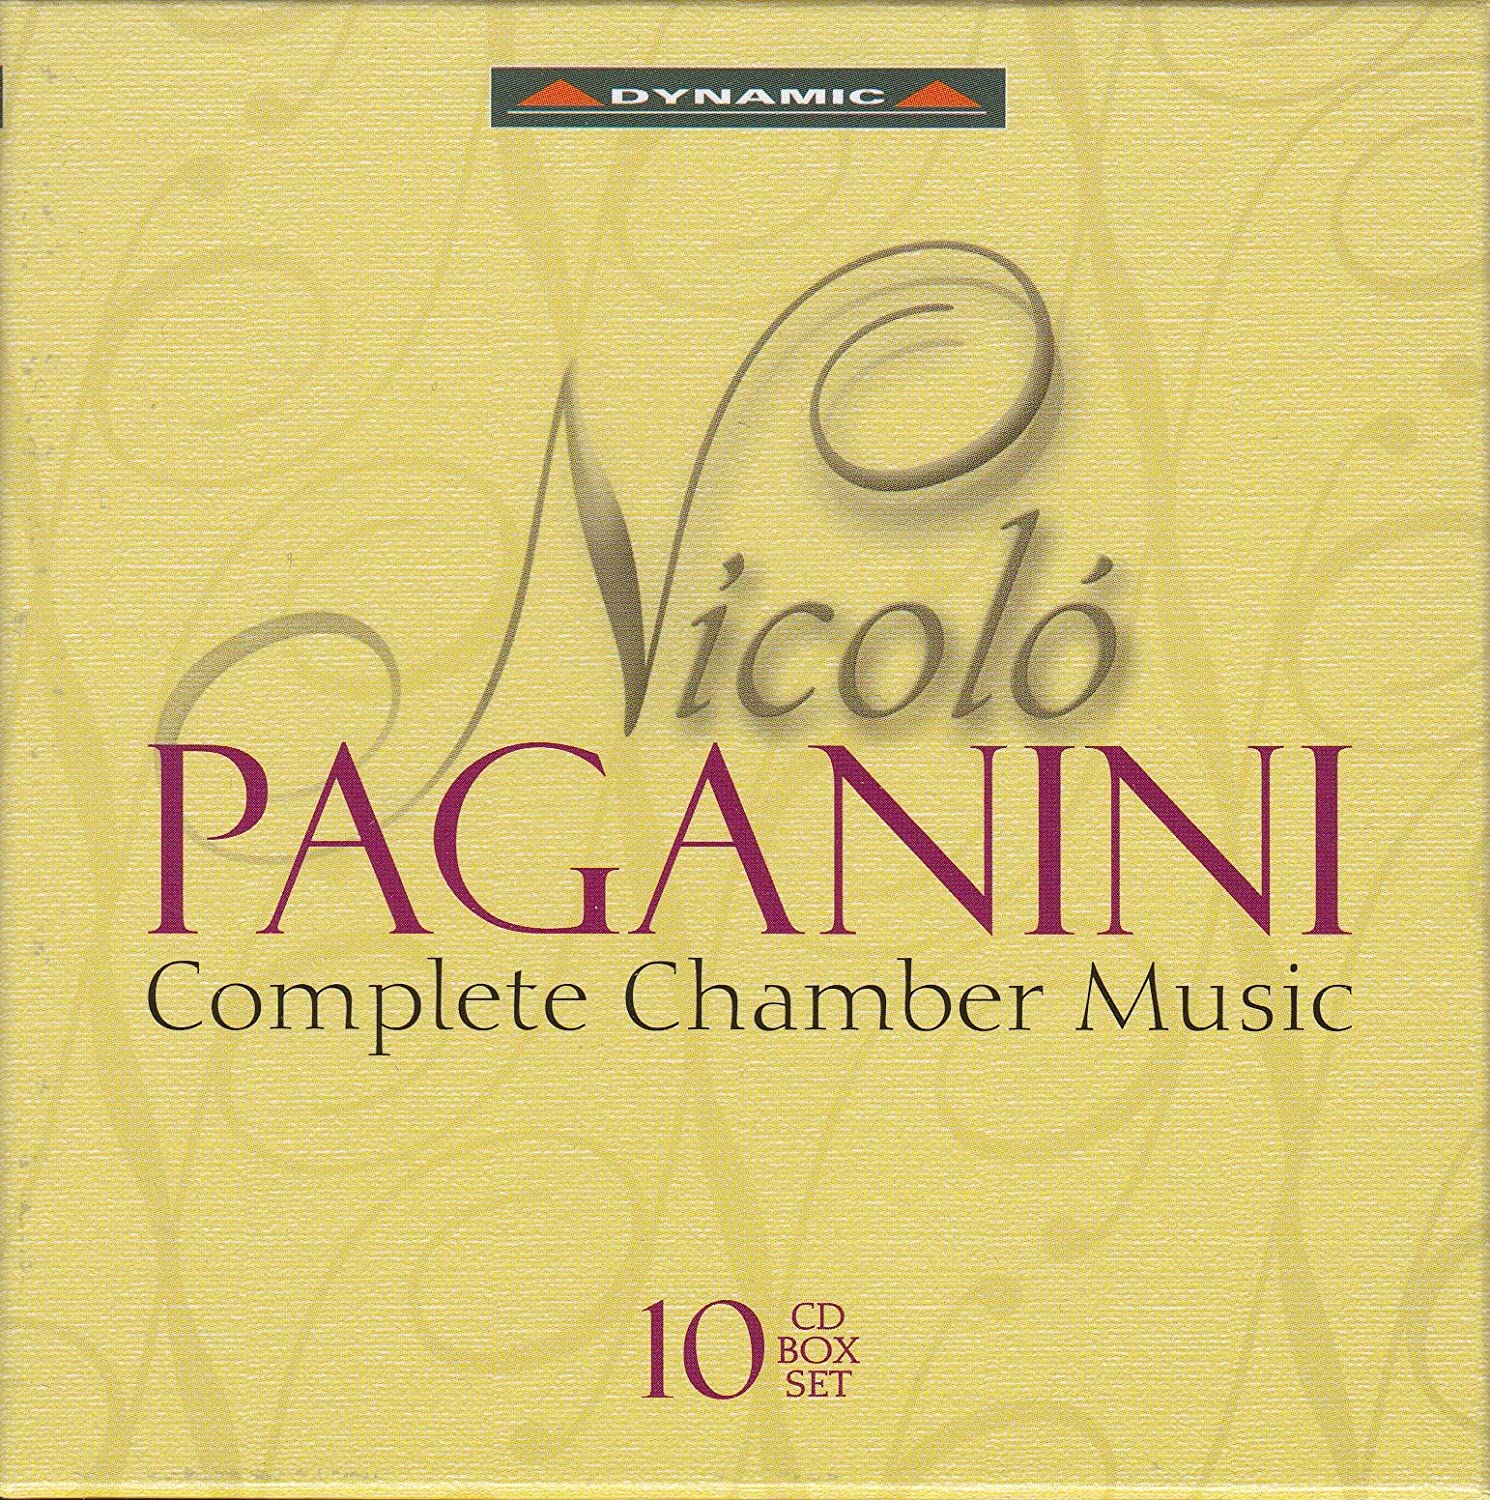 Paganini Complete Chamber Music